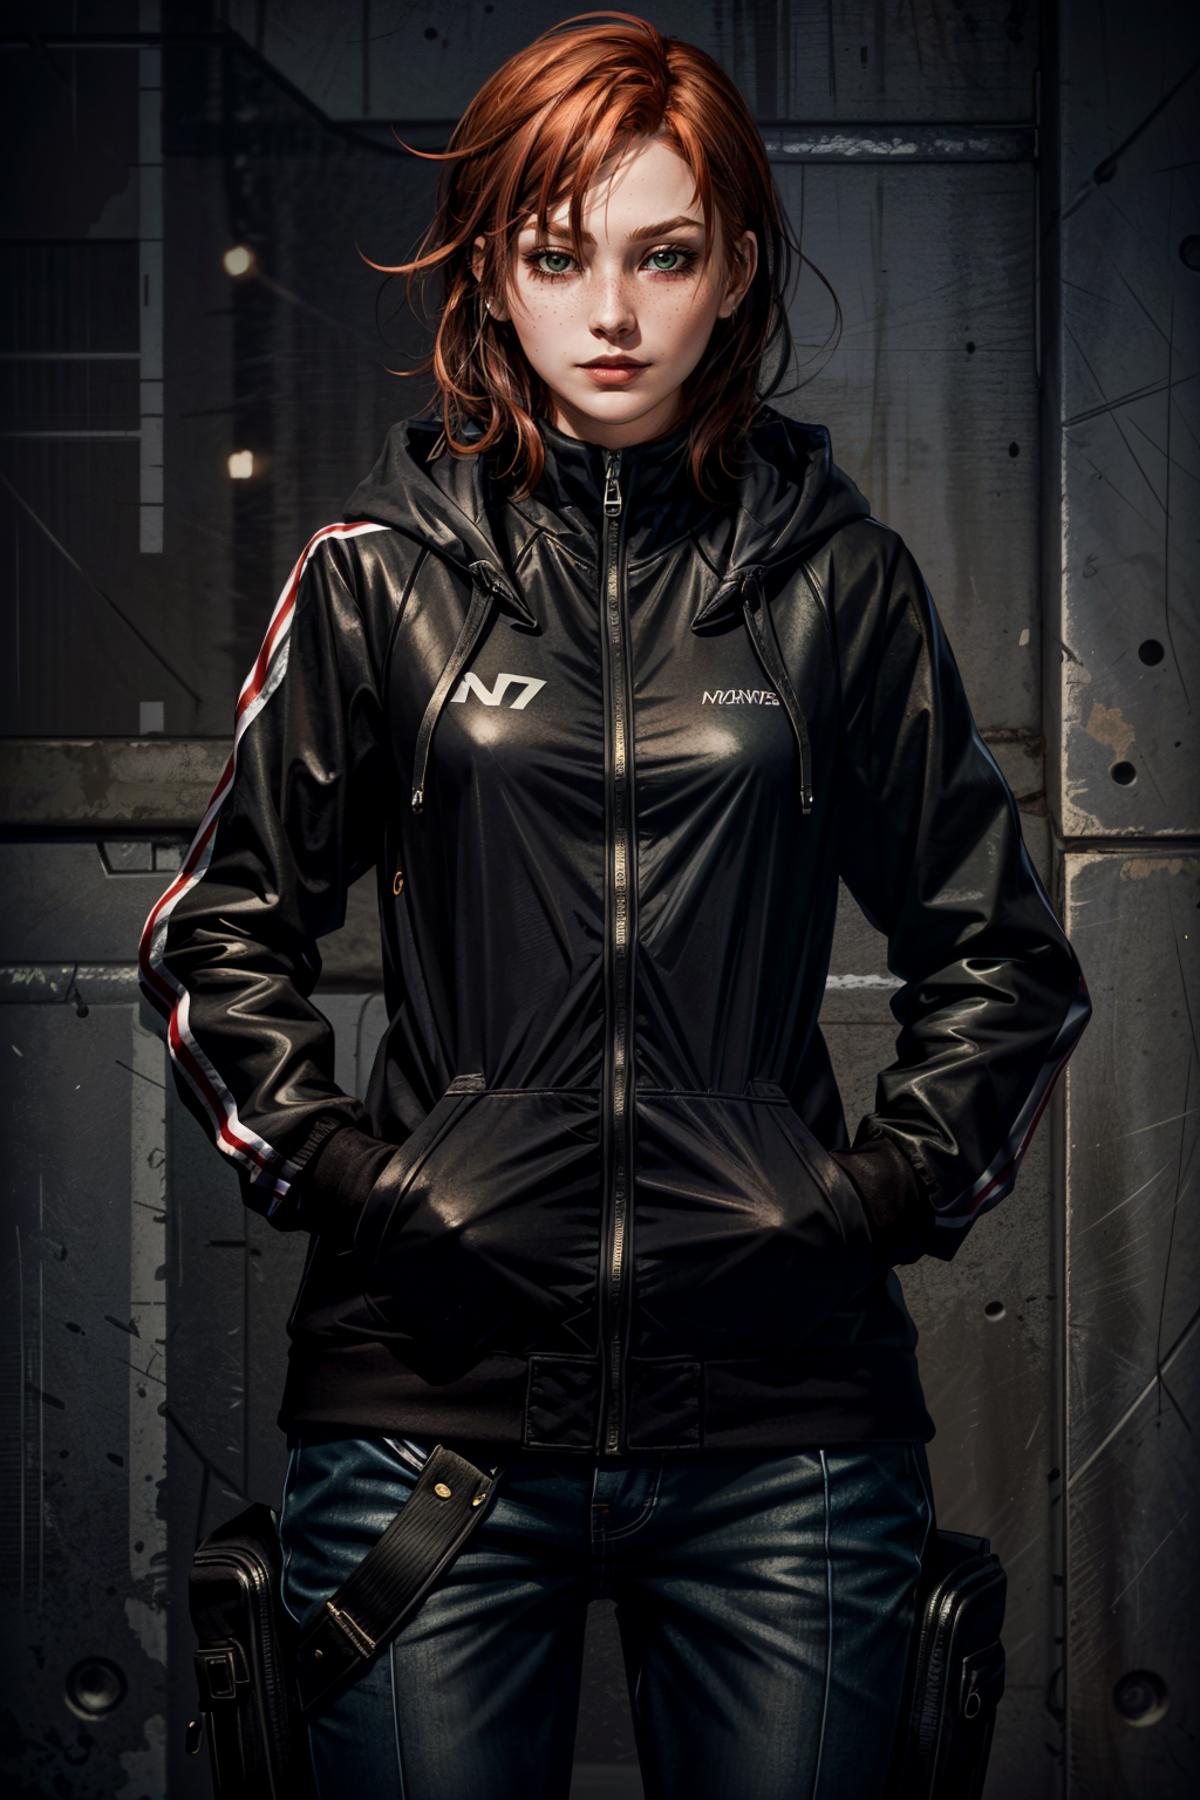 Female Shepard from Mass Effect image by BloodRedKittie